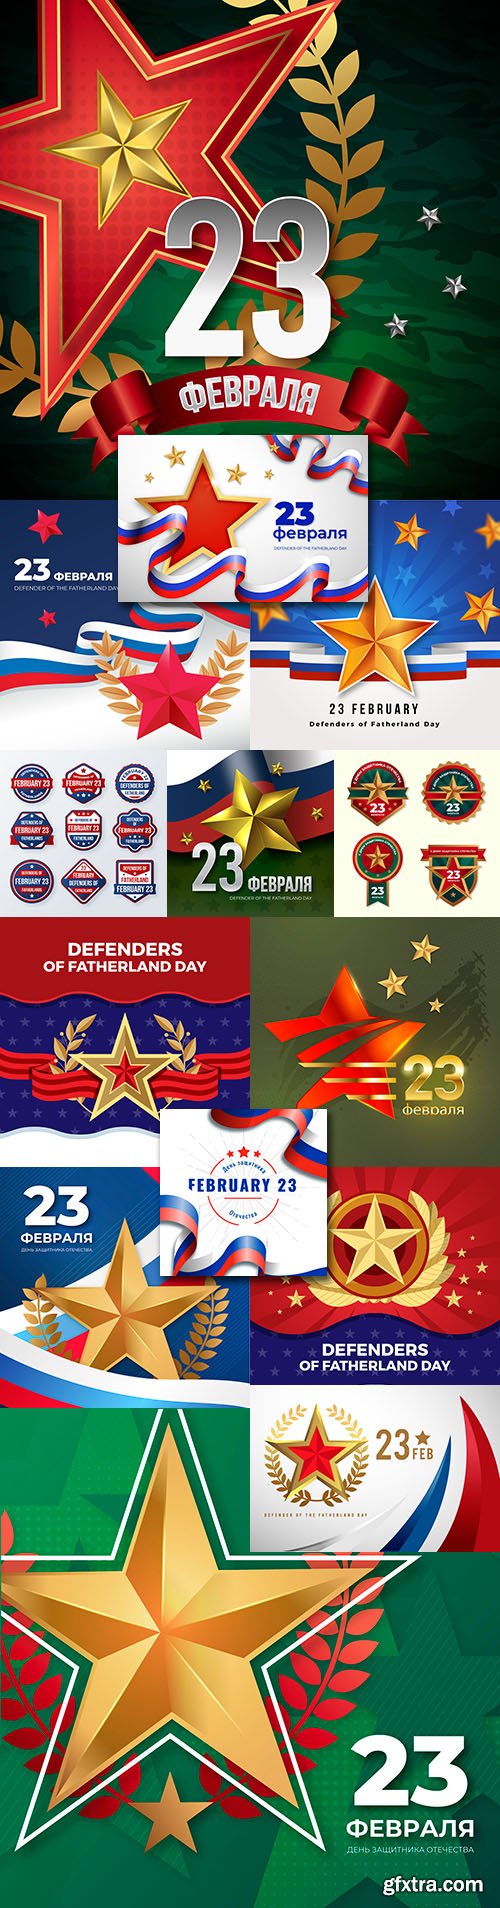 February 23 Defender of Fatherland day illustration flat design 3